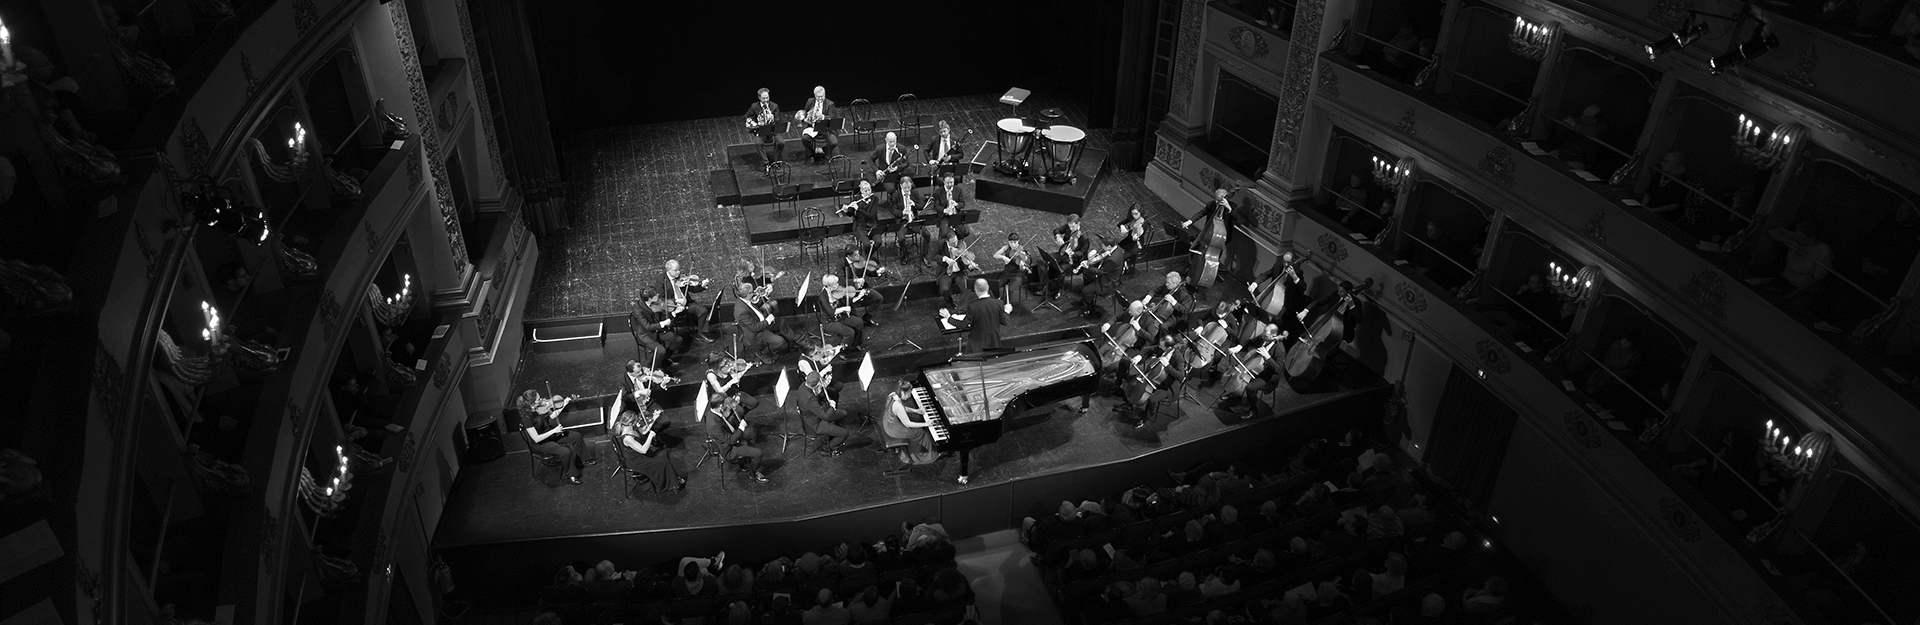 Orchestra of Padua and Veneto